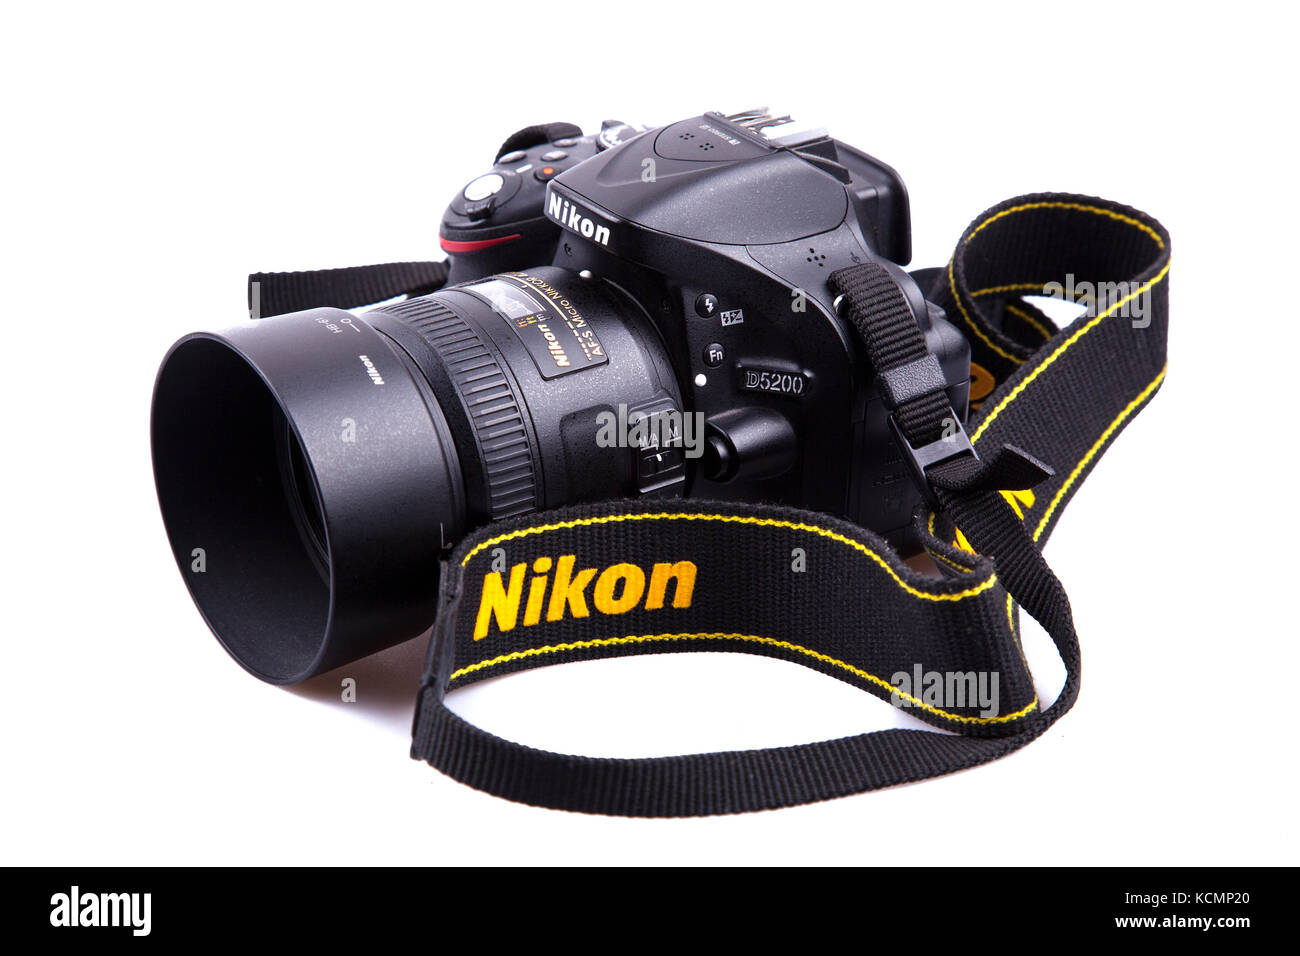 Nikon fotografías e imágenes de alta resolución - Alamy